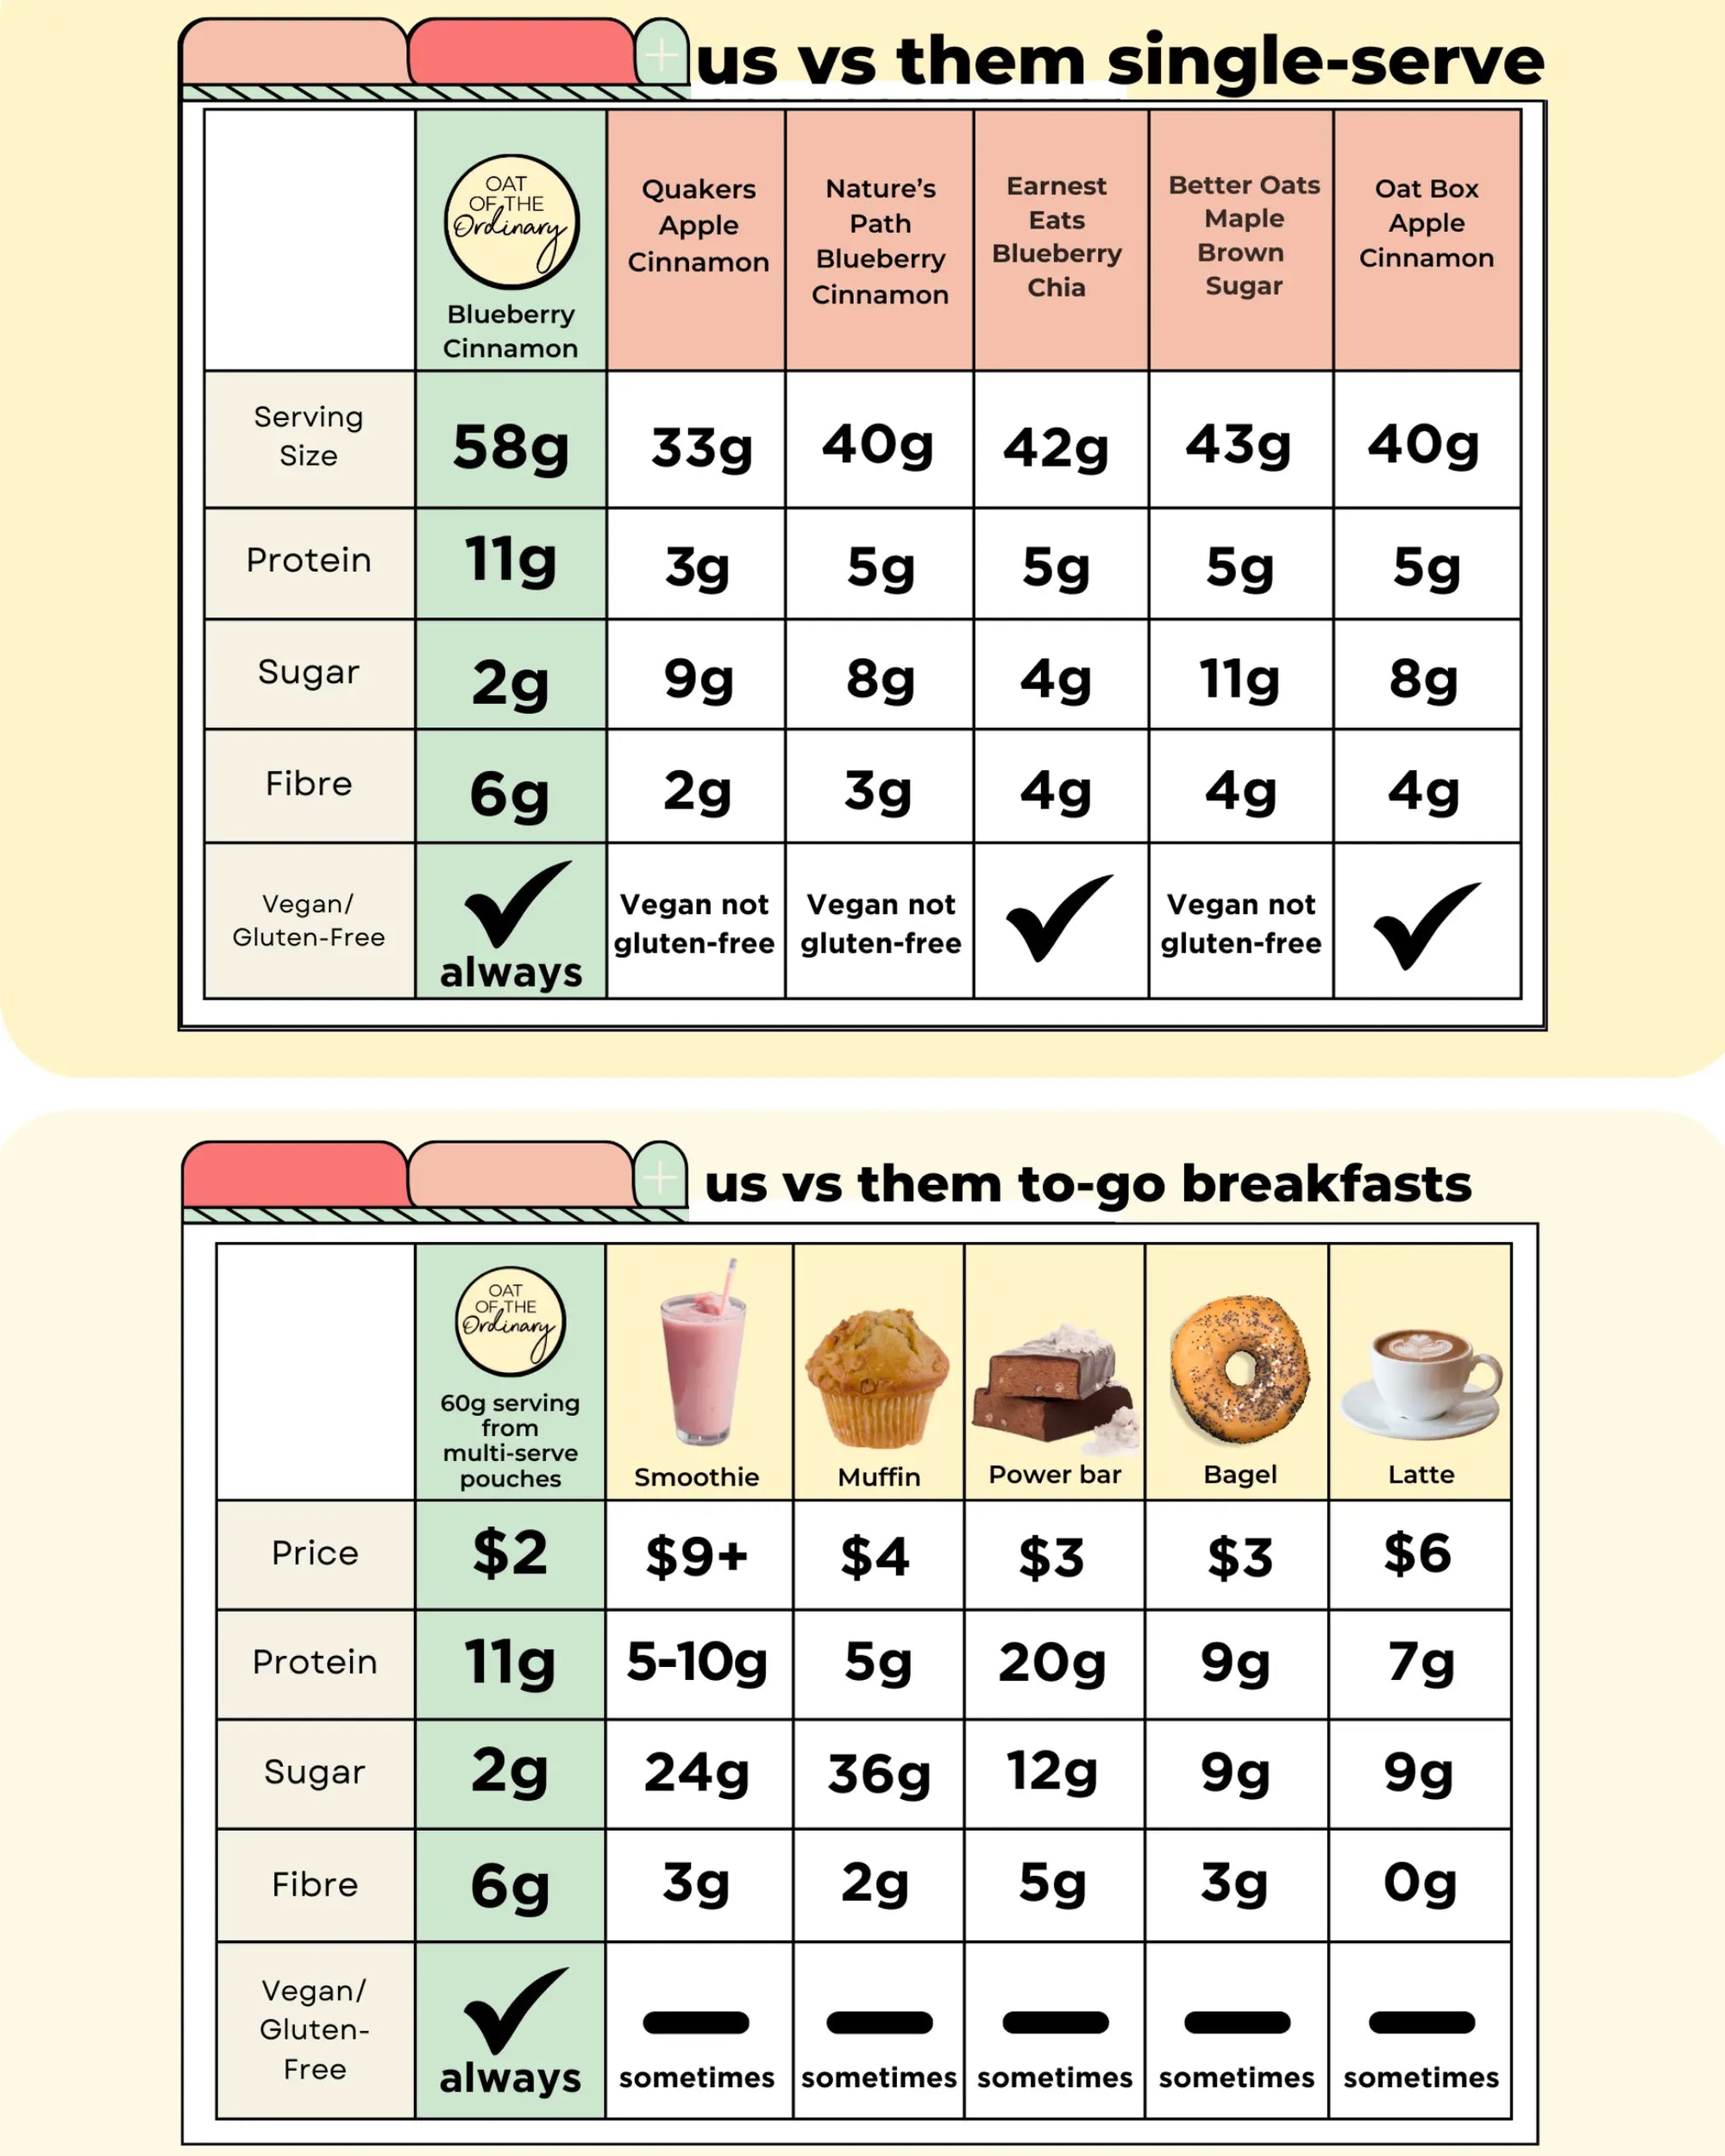 us versus them oatmeal comparison chart.